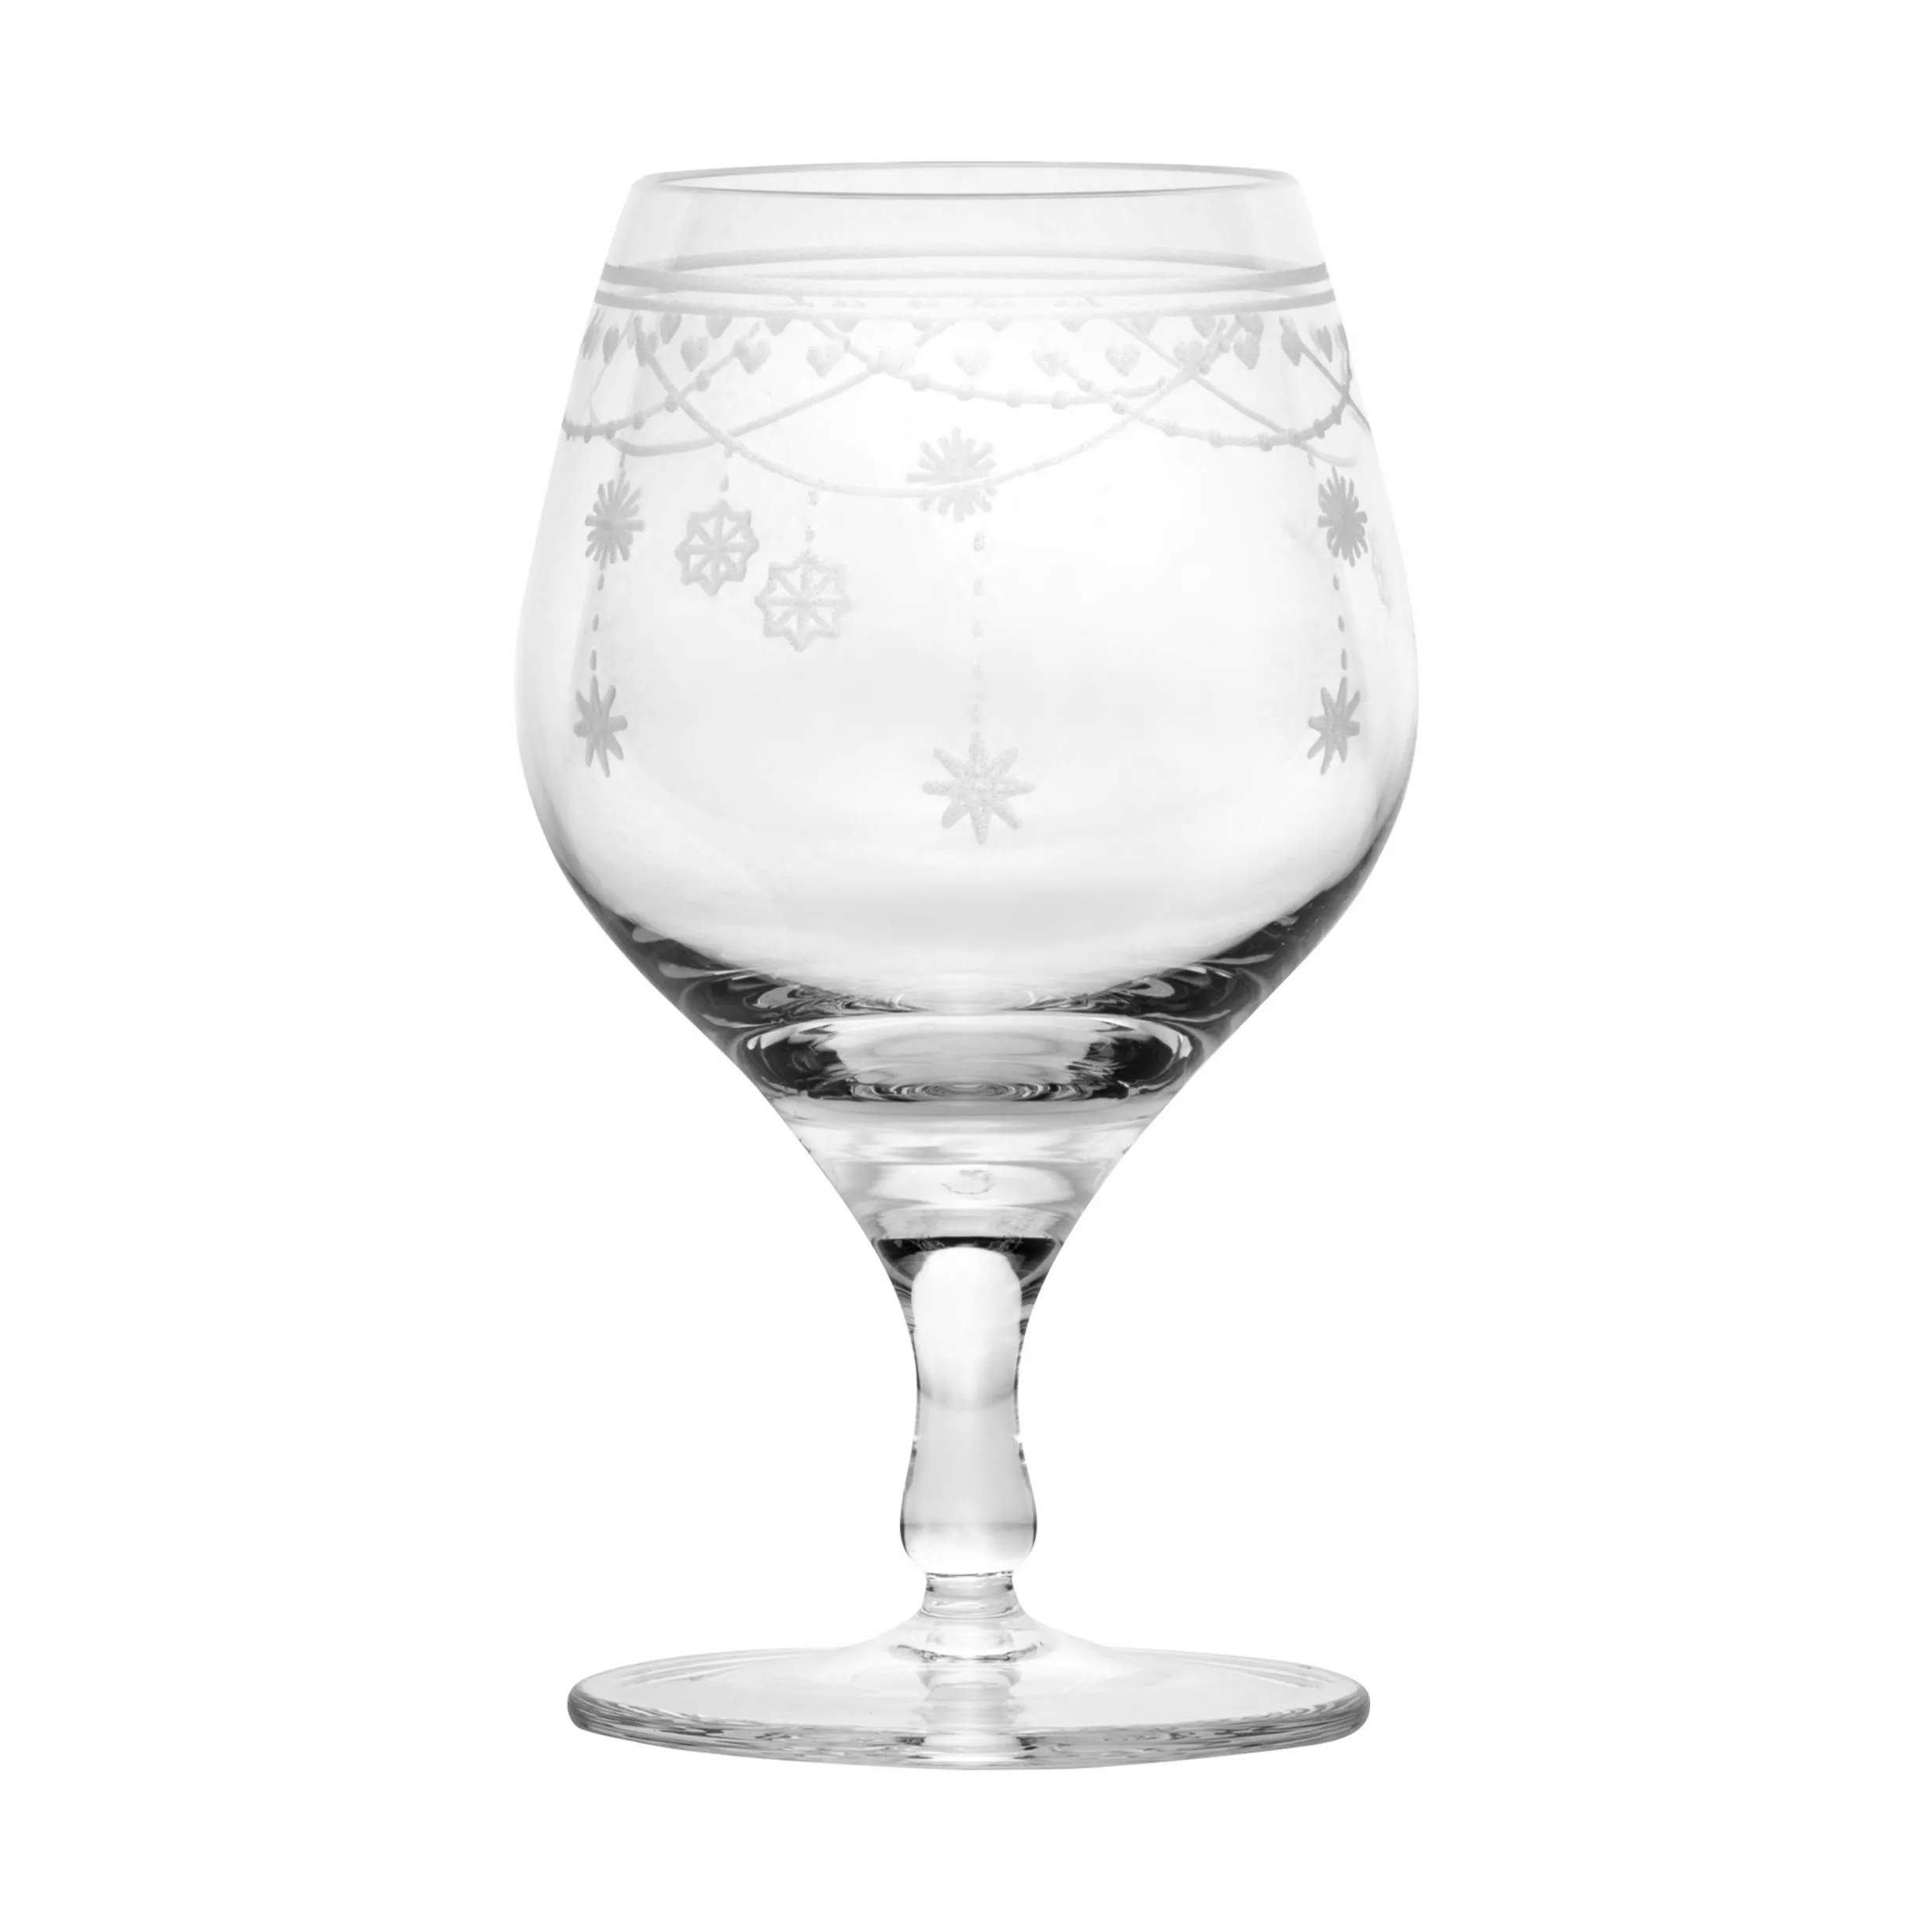 Wik & Walsøe snapseglas Julemorgen Snapseglas